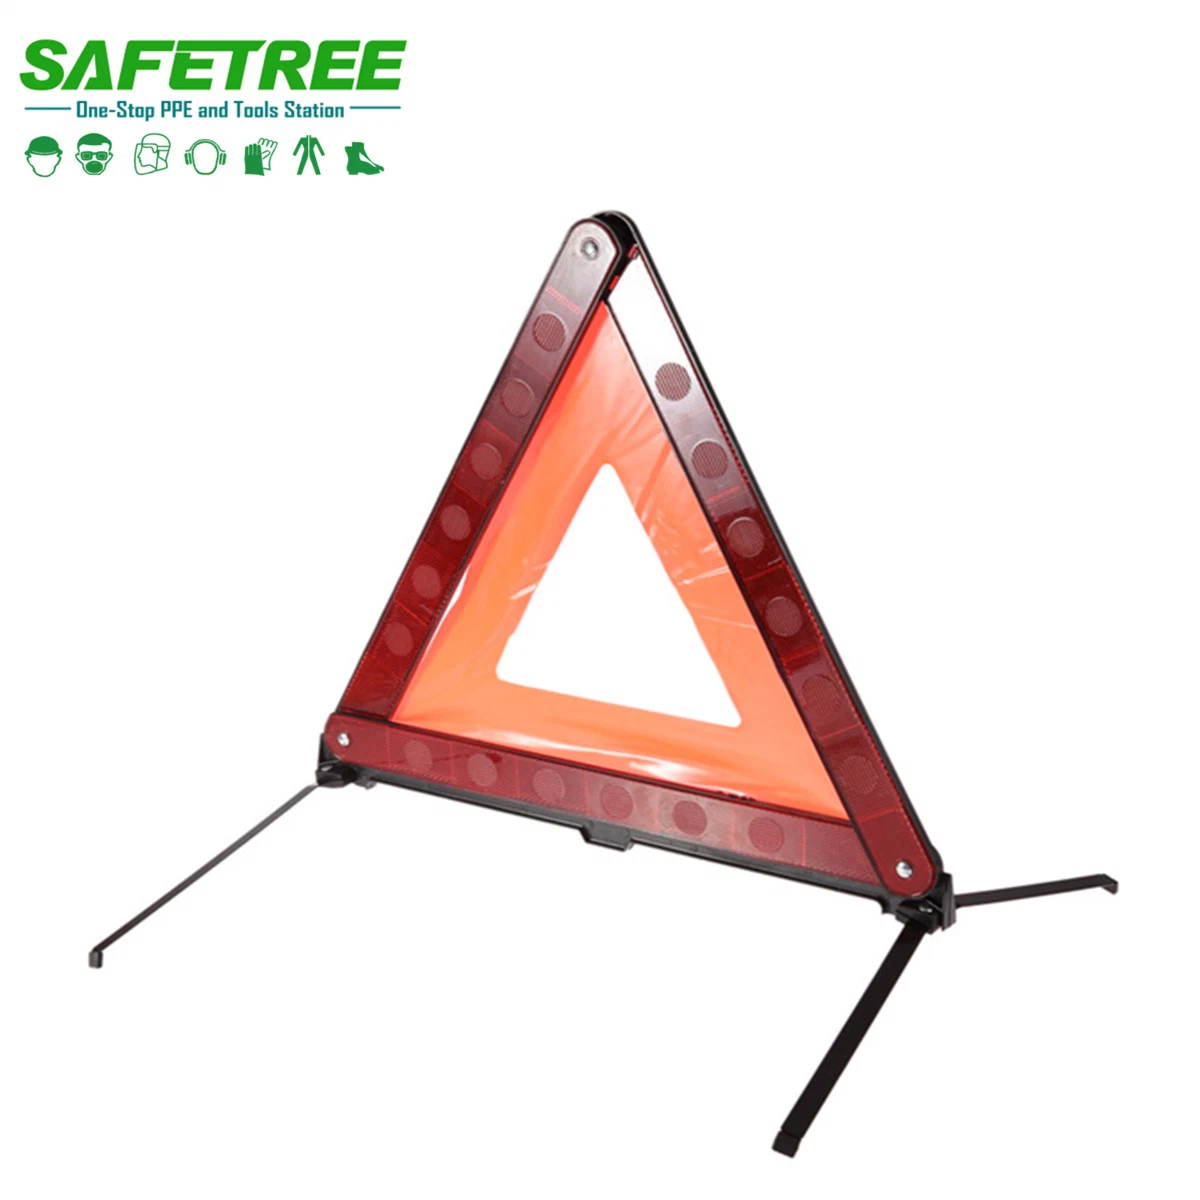 Safetree Safety Triangle Warning Kit Foldable Emergency Warning Triangle Sign Car Roadside Emergency Kit with Reflective Warning Triangle